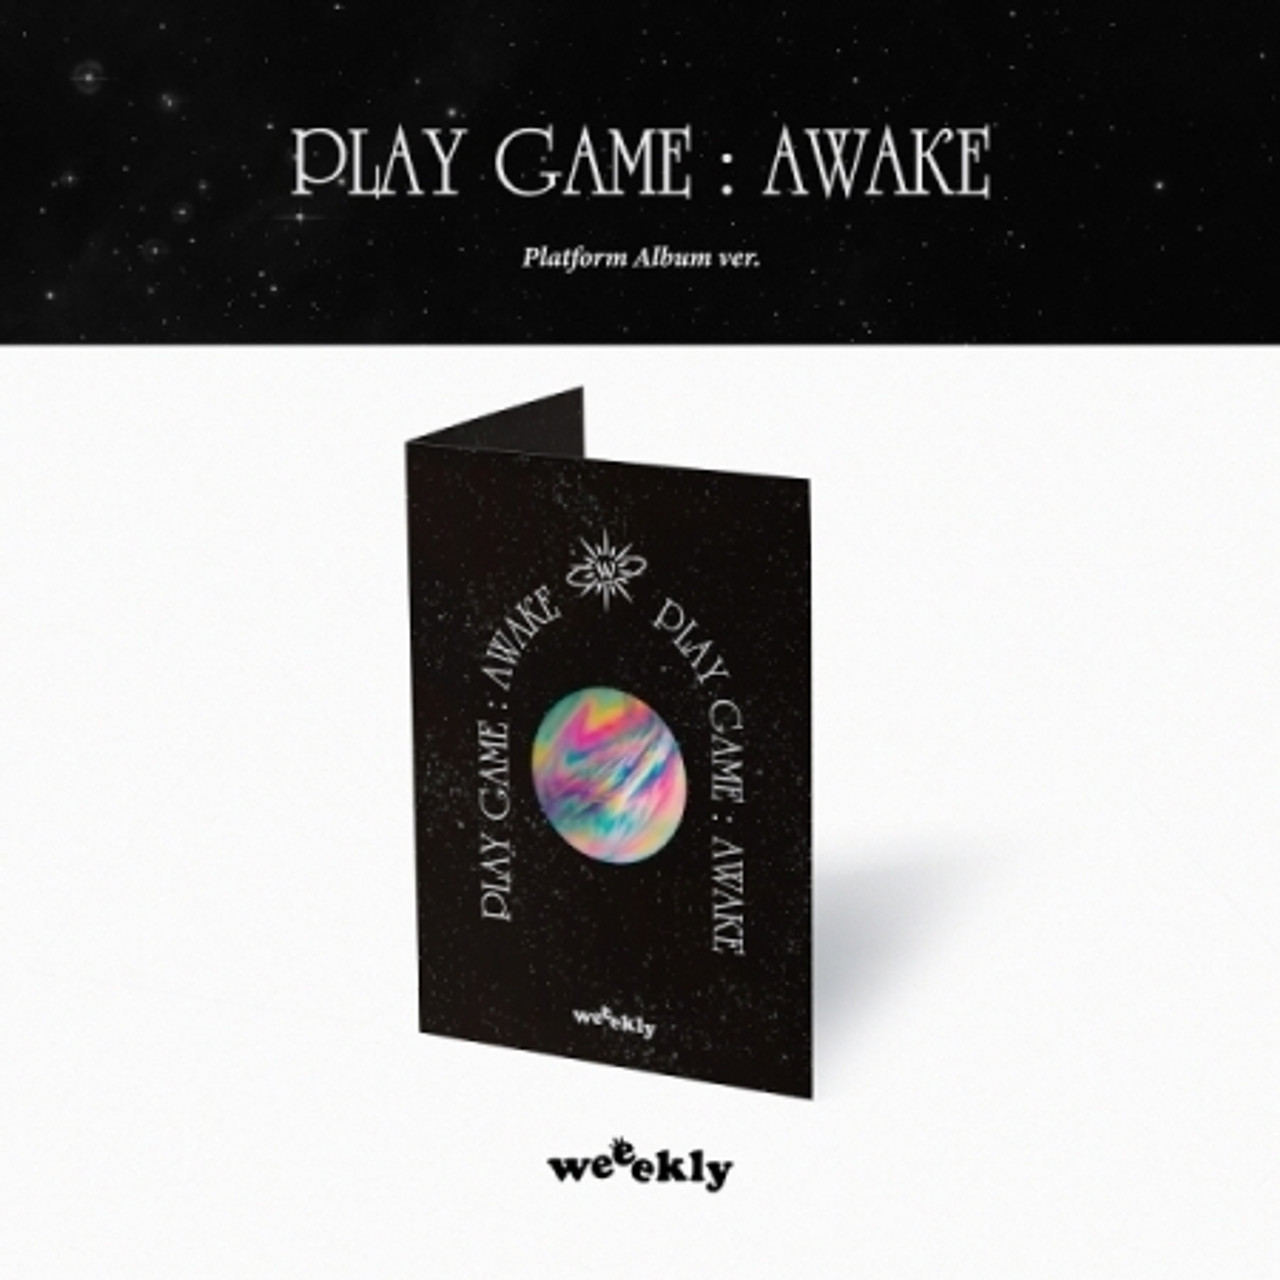 WEEEKLY  1st Play Game  AWAKE Platform Album ver